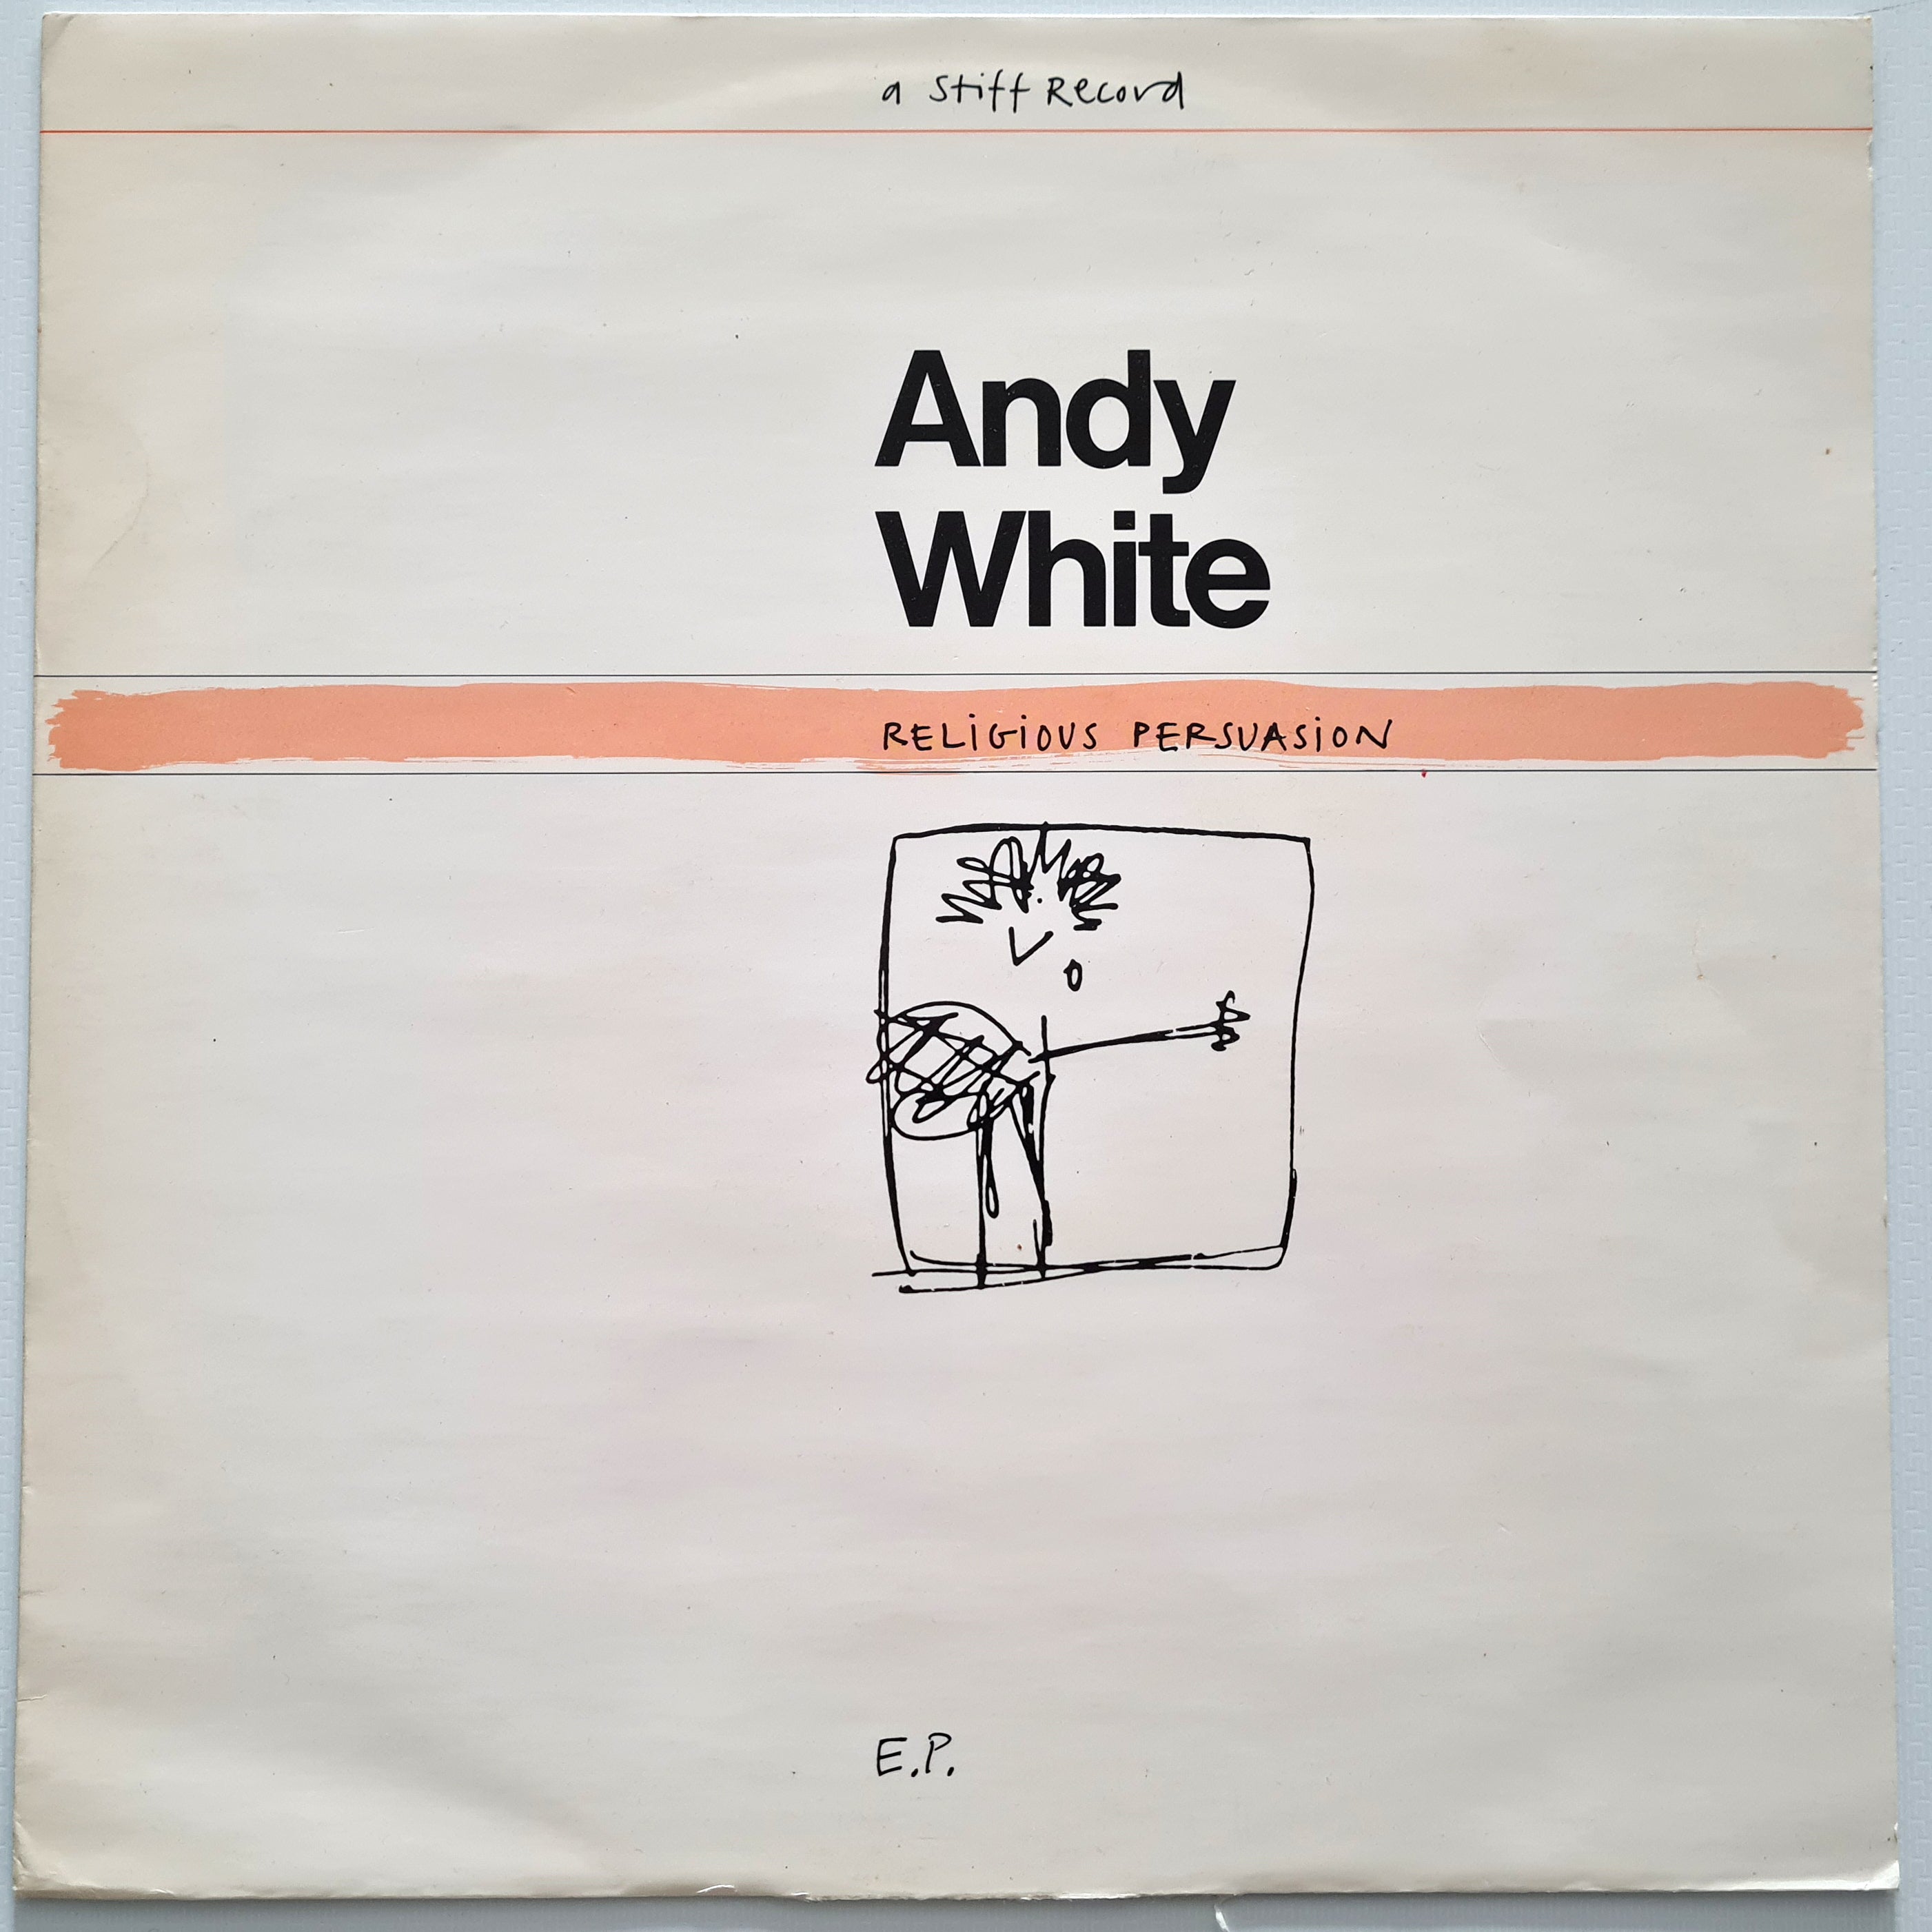 Andy White - Religious Persuasion (EP)